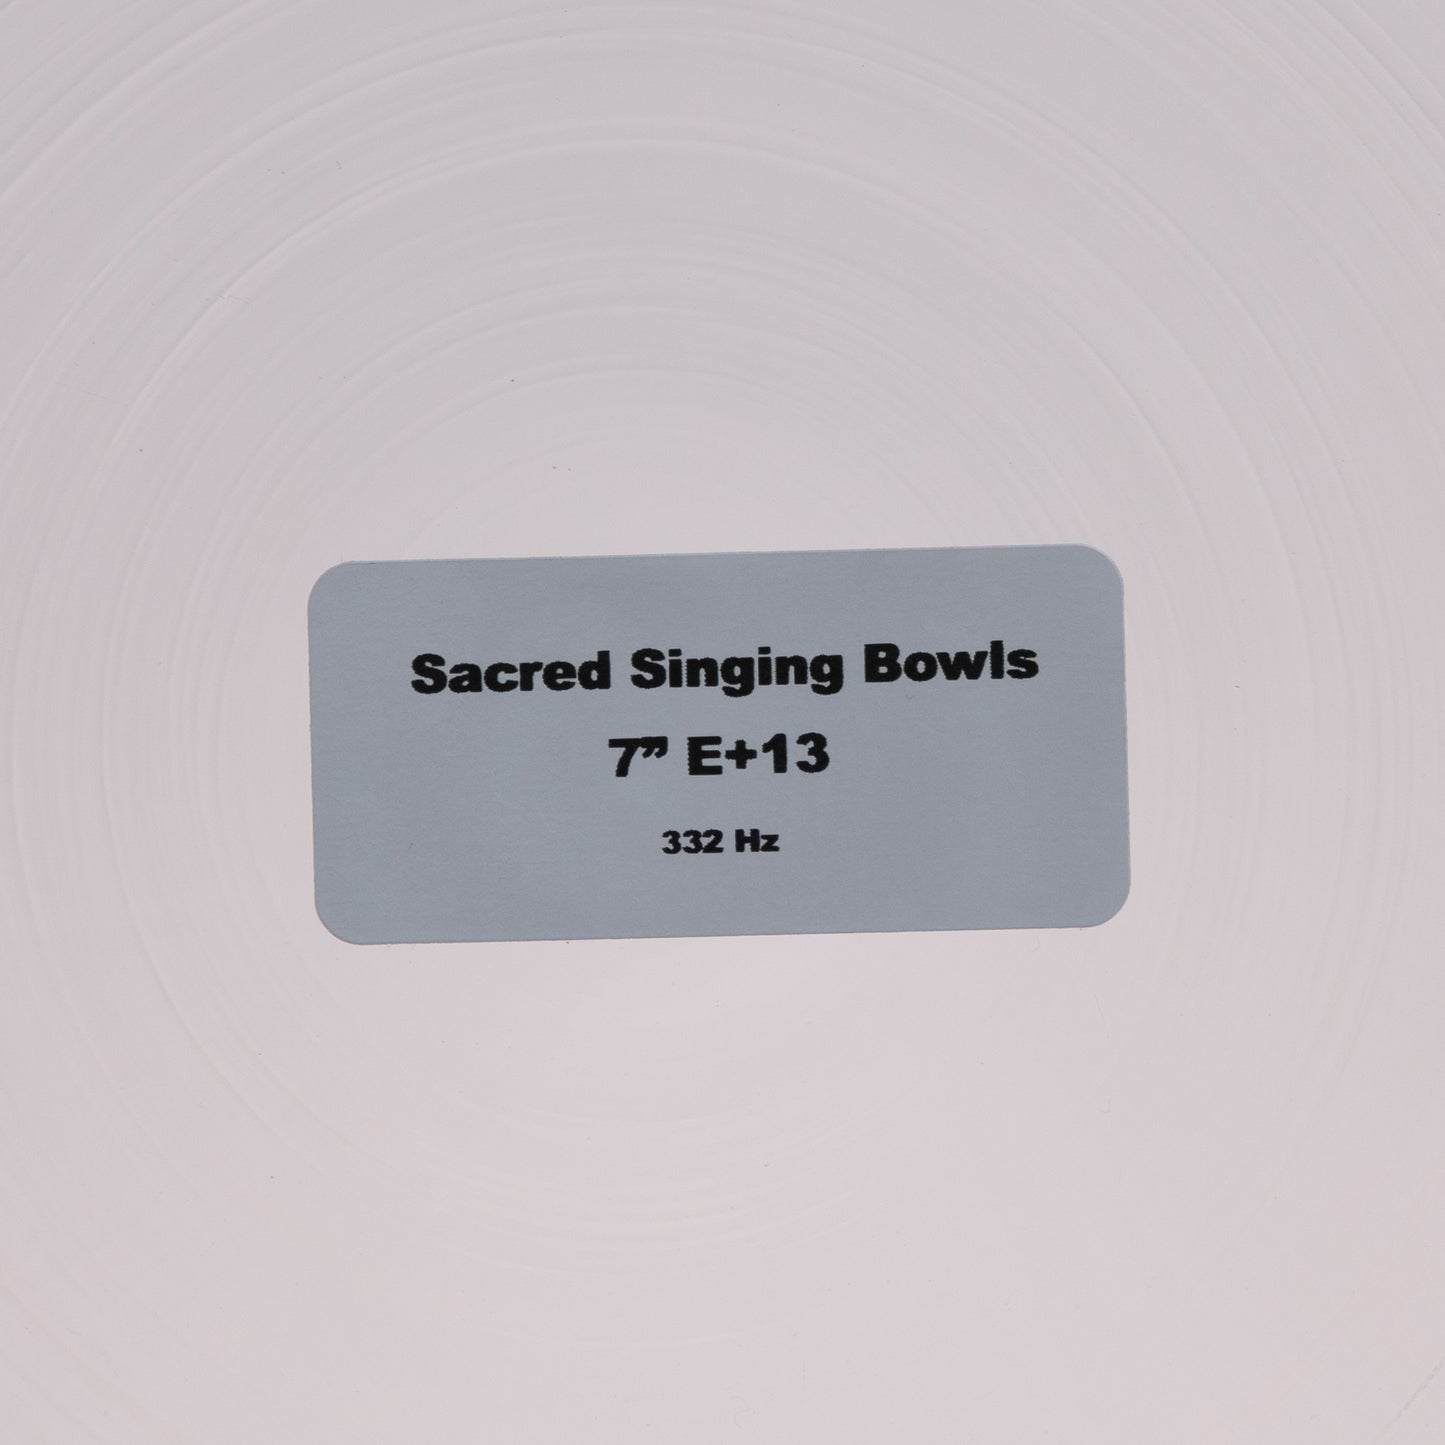 7" E+13 Clear Quartz Crystal Singing Bowl, Sacred Singing Bowls